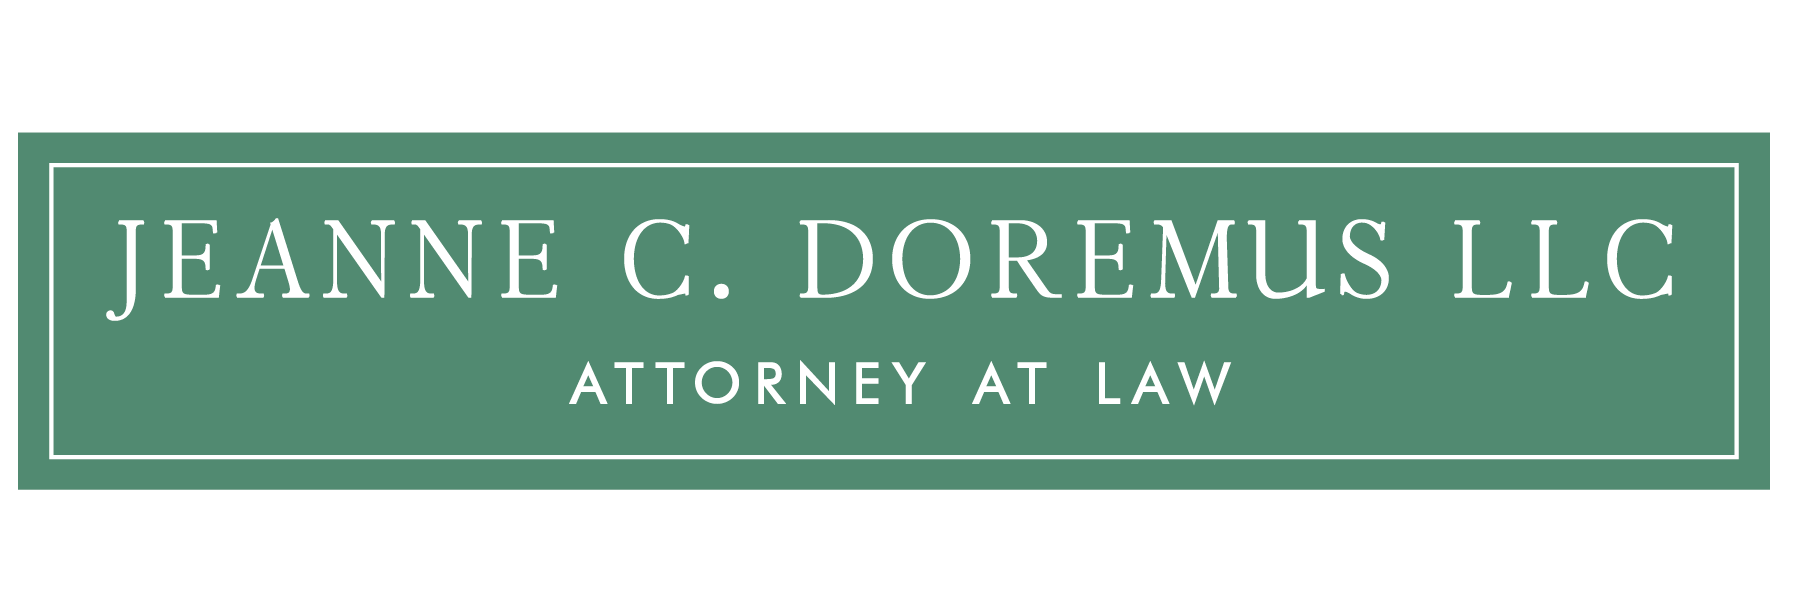 Law Office of Jeanne C. Doremus